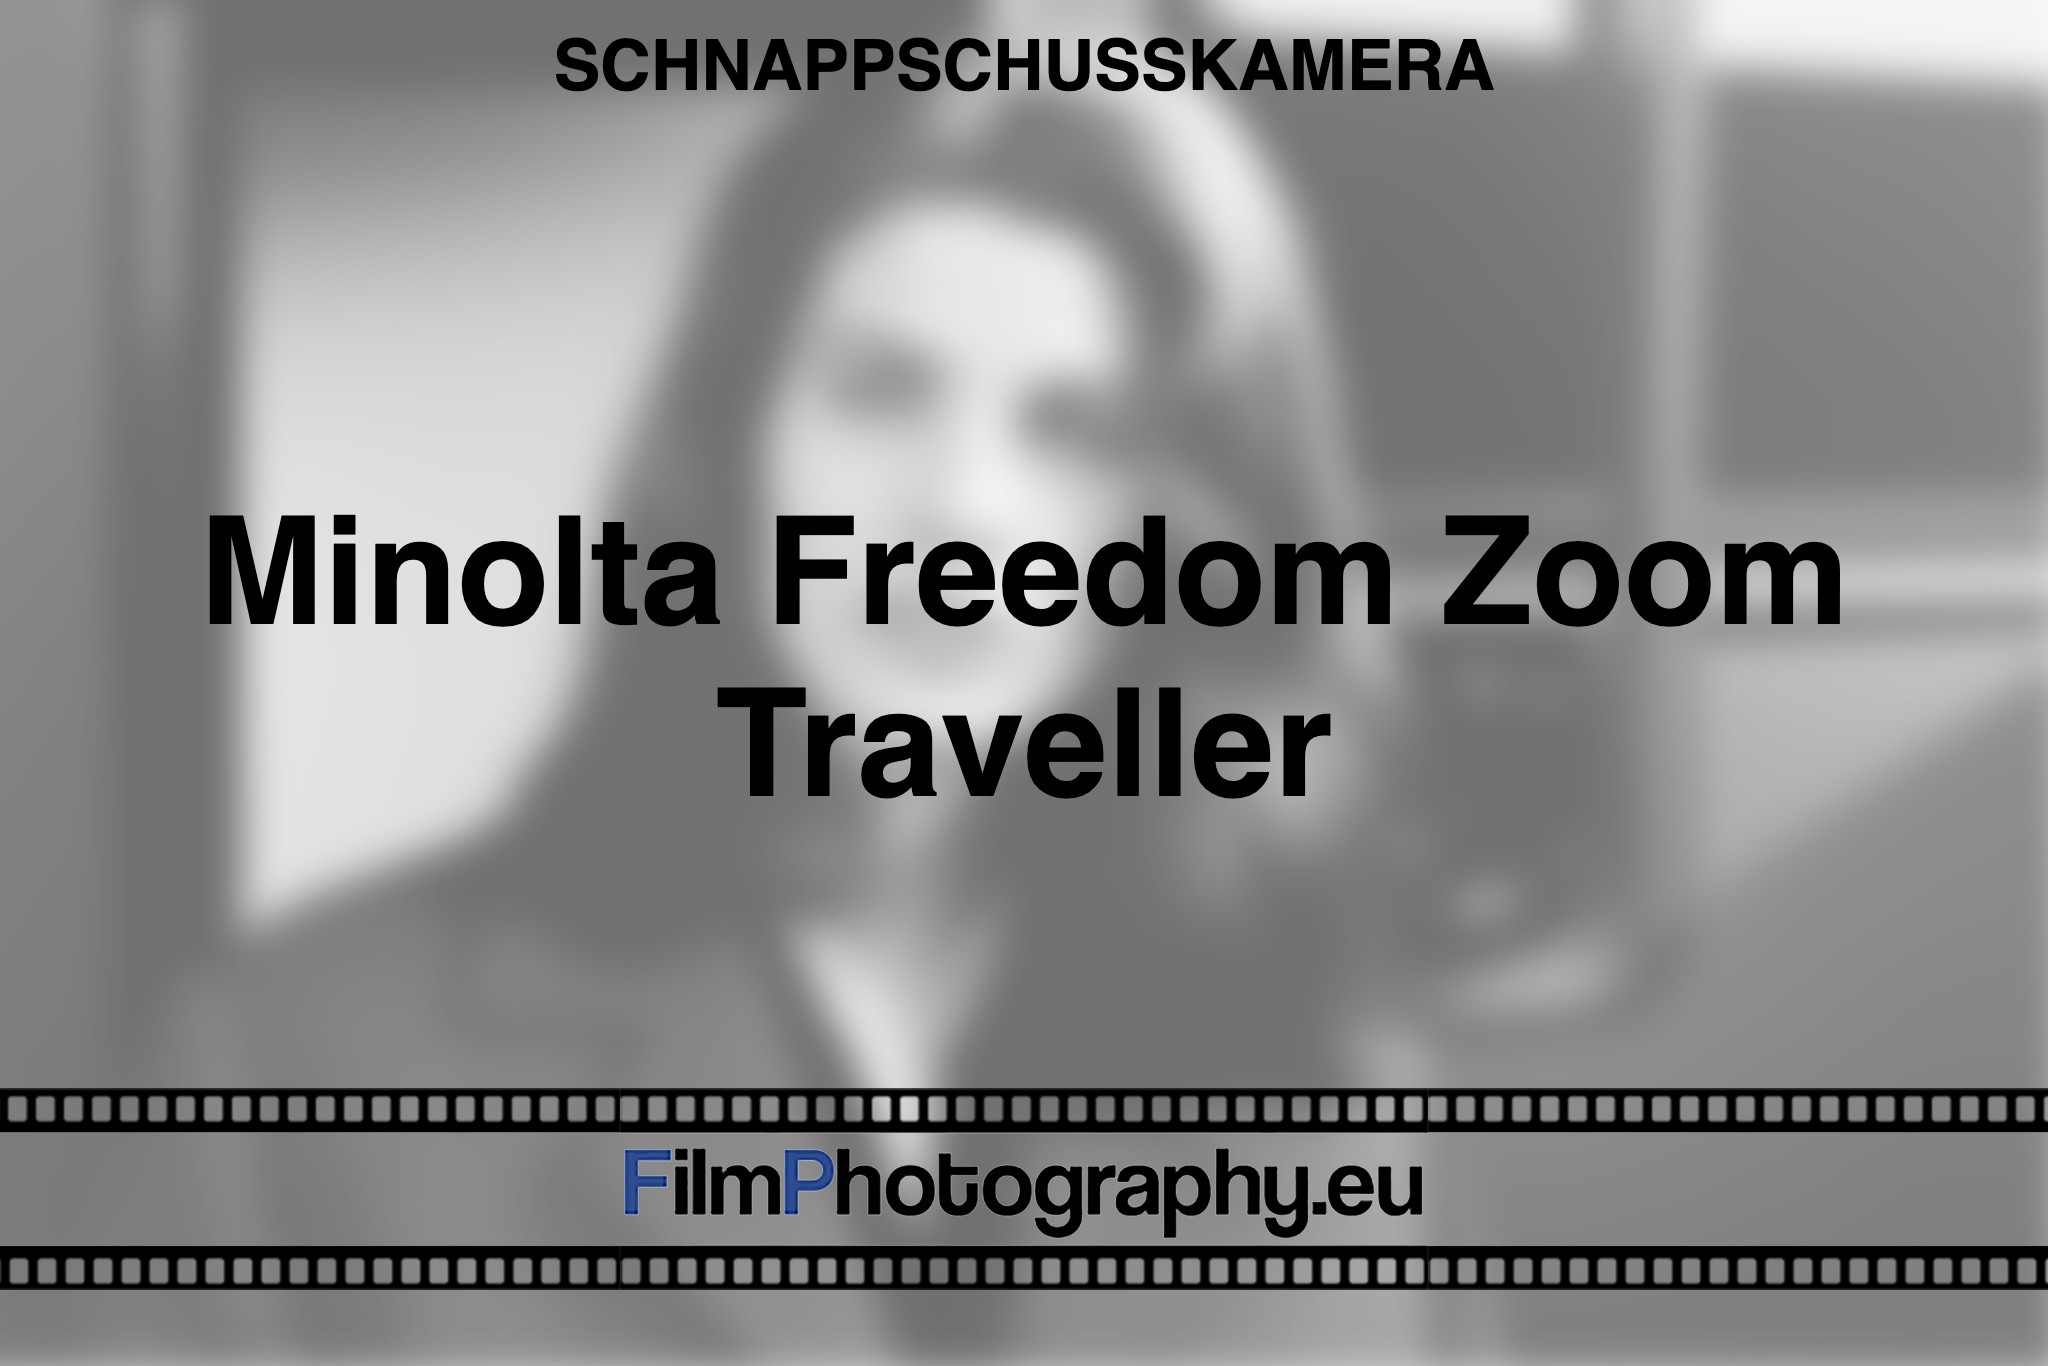 minolta-freedom-zoom-traveller-schnappschusskamera-bnv